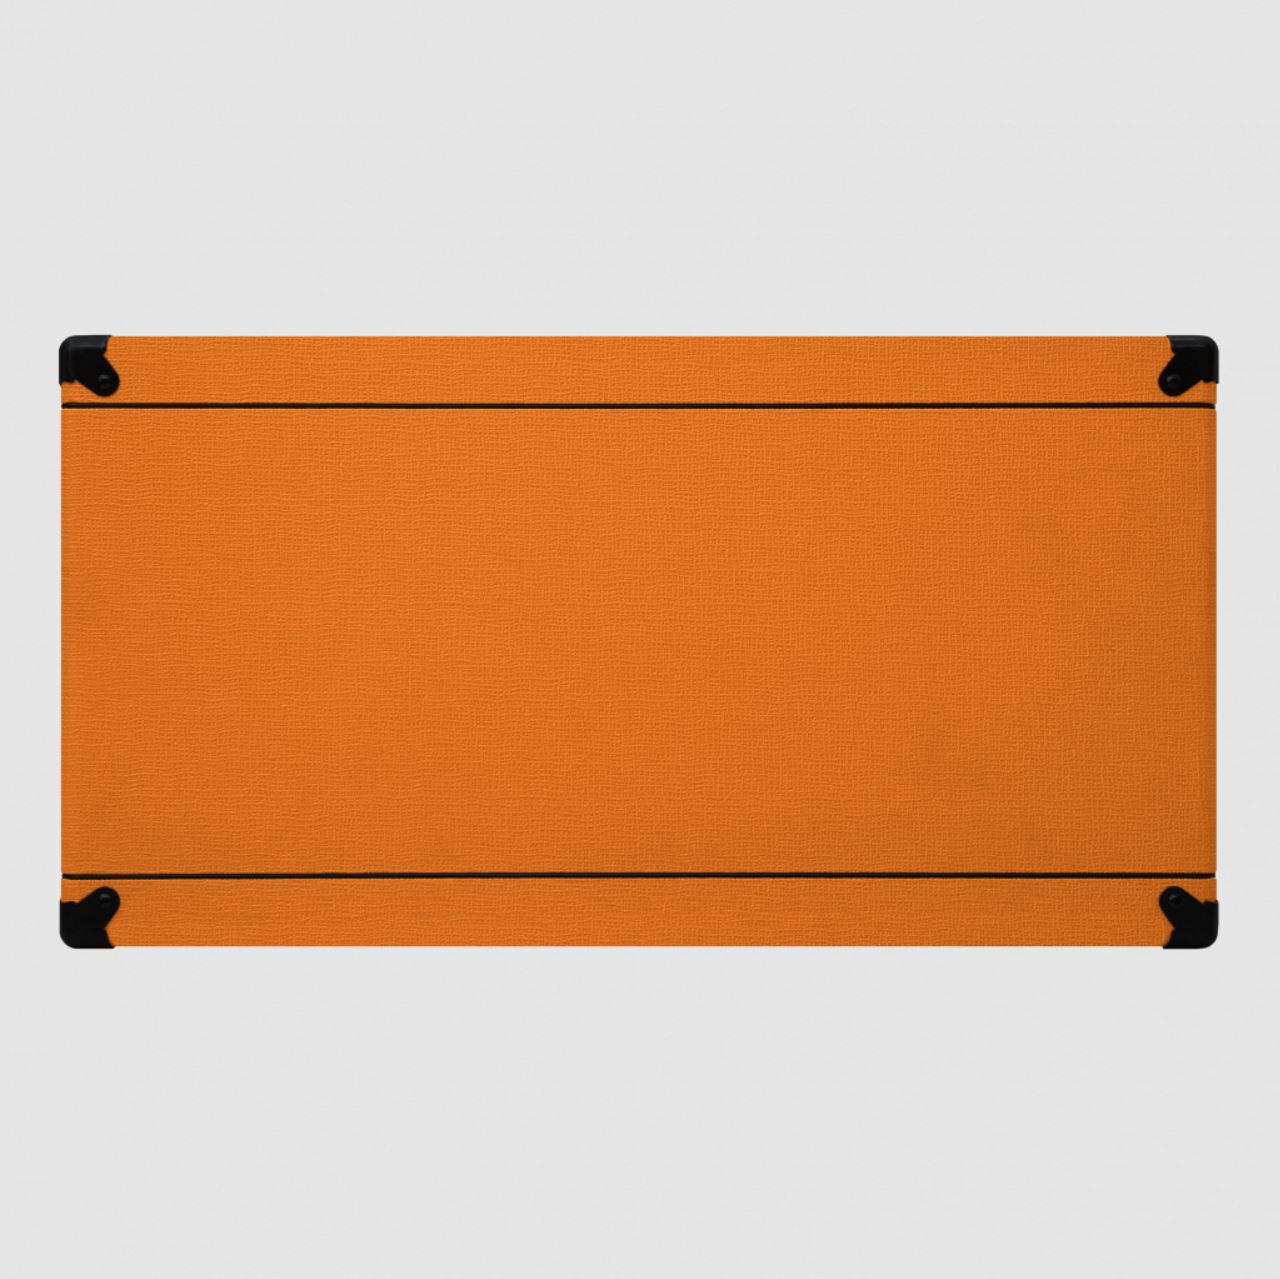 Orange Amplifiers CRUSH PRO 412 240-Watt 4x12" Closed-back Speaker Cabinet (Orange) with 18mm Birch Ply Construction